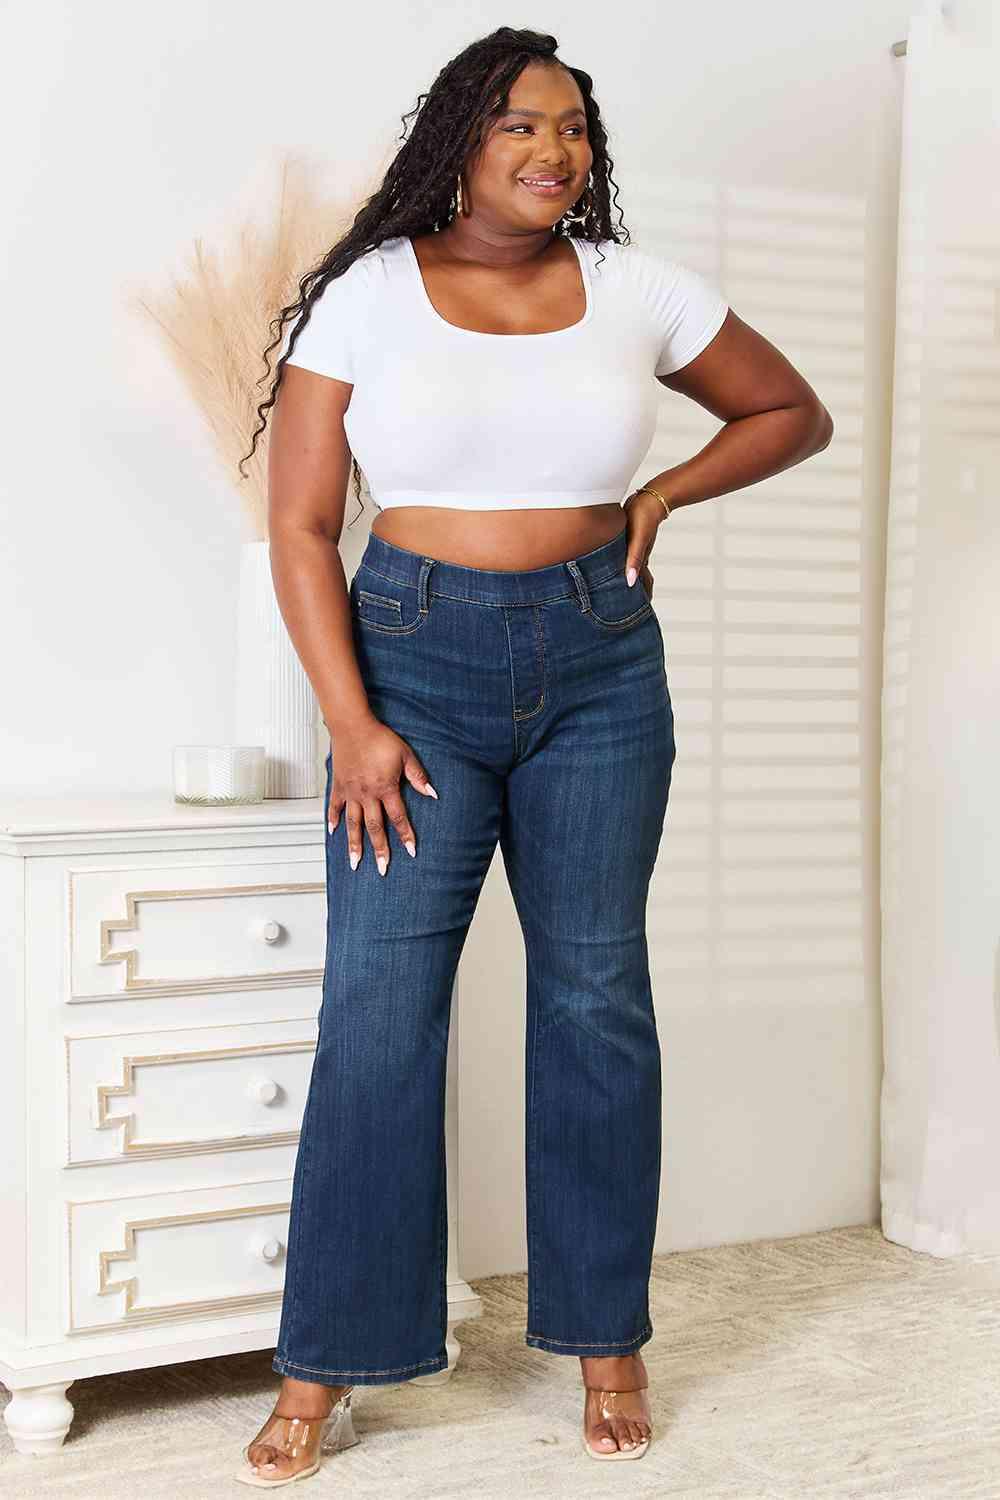 Bona Fide Fashion - Full Size Elastic Waistband Slim Bootcut Jeans - Women Fashion - Bona Fide Fashion